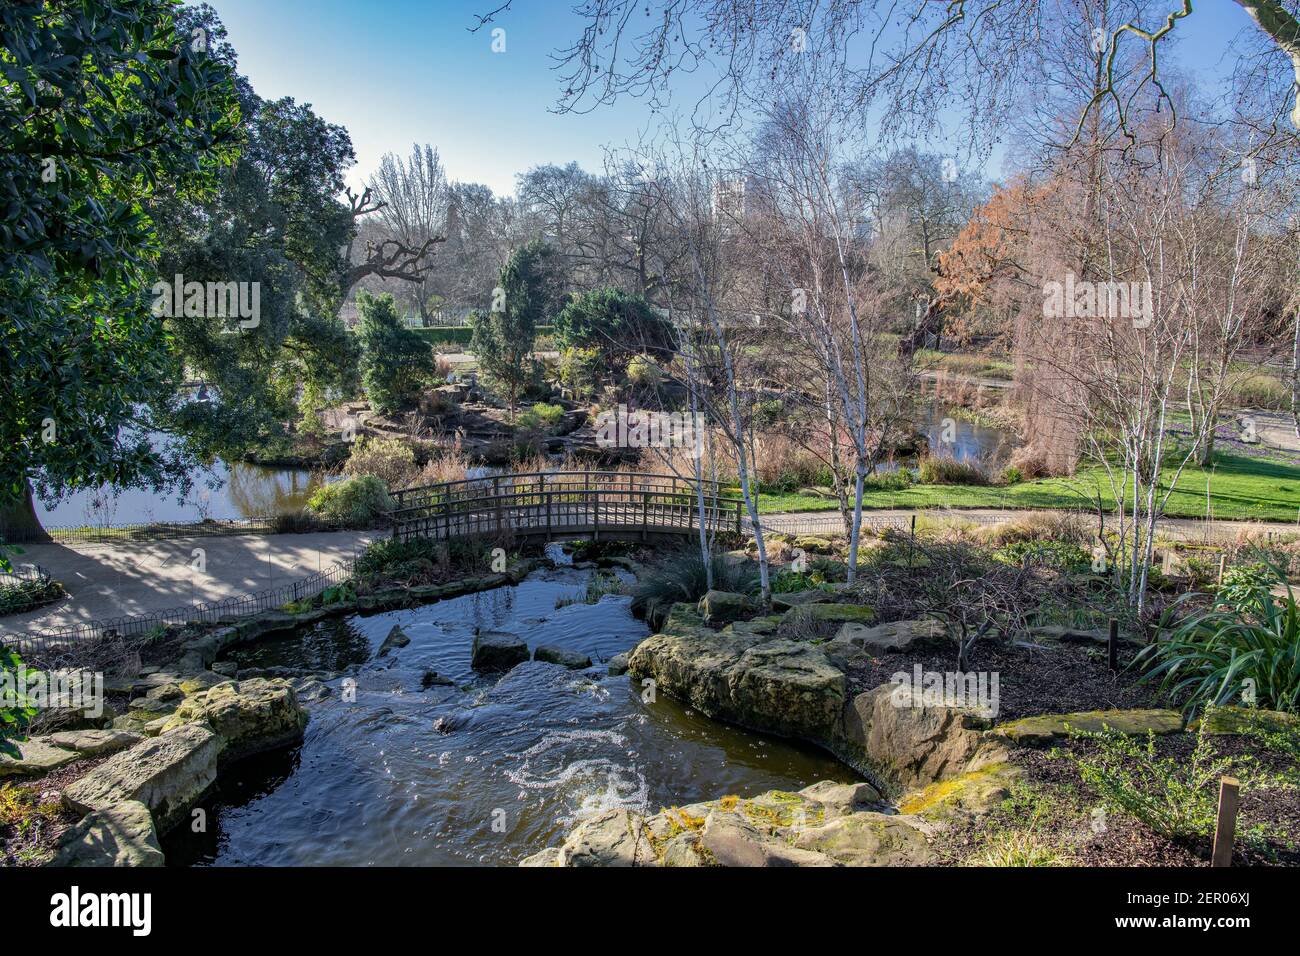 Top view Japanese Garden Island Queen Mary's Garden Regents Park London England Stock Photo